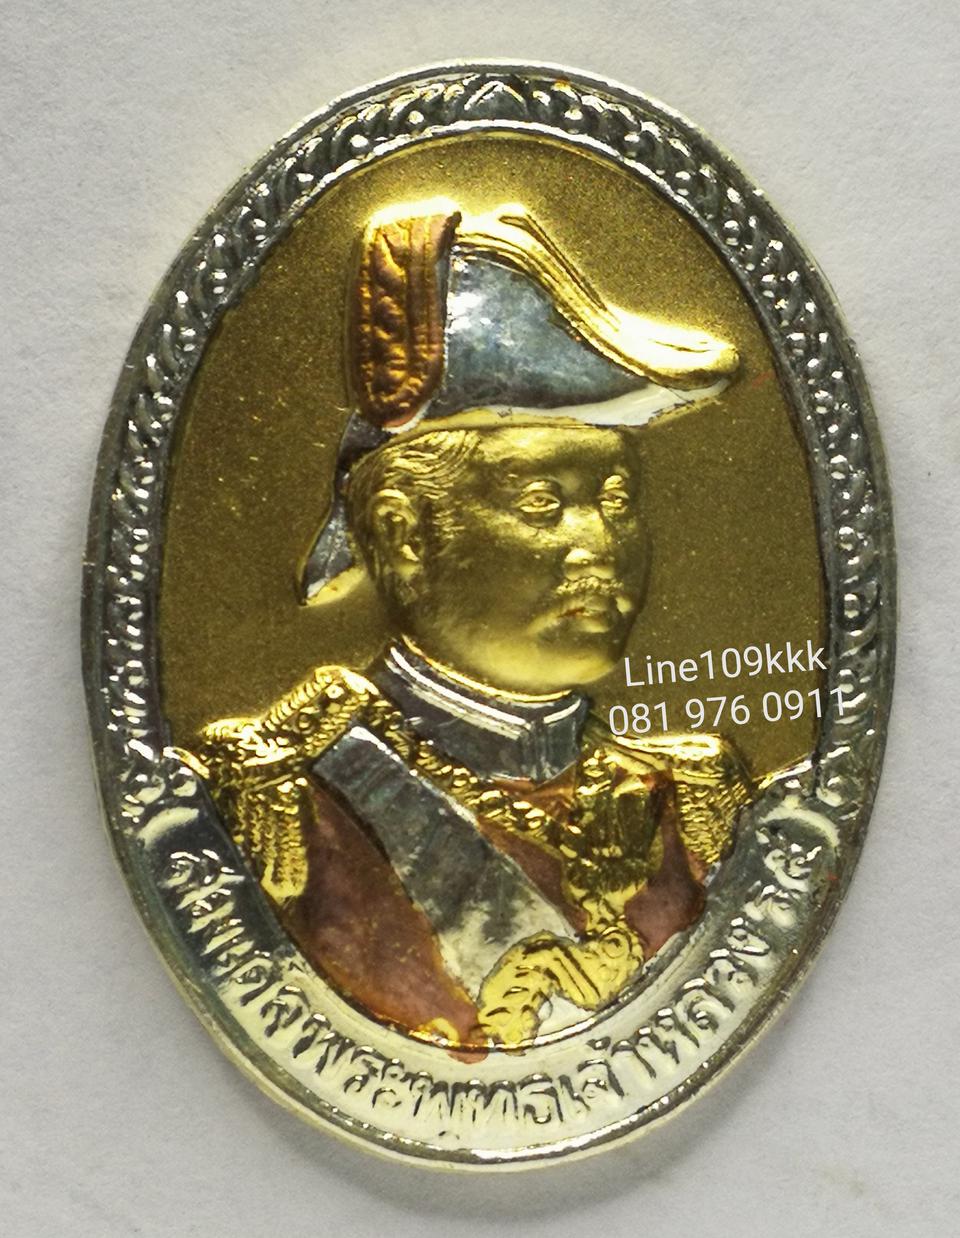 A6 เหรียญสมเด็จพระพุทธเจ้าหลวง ร.5 หลังพระสยามเทวาธิราช คุ้มทรัพย์ประทานสุข เนื้อสามกษัตริย์ ปี46